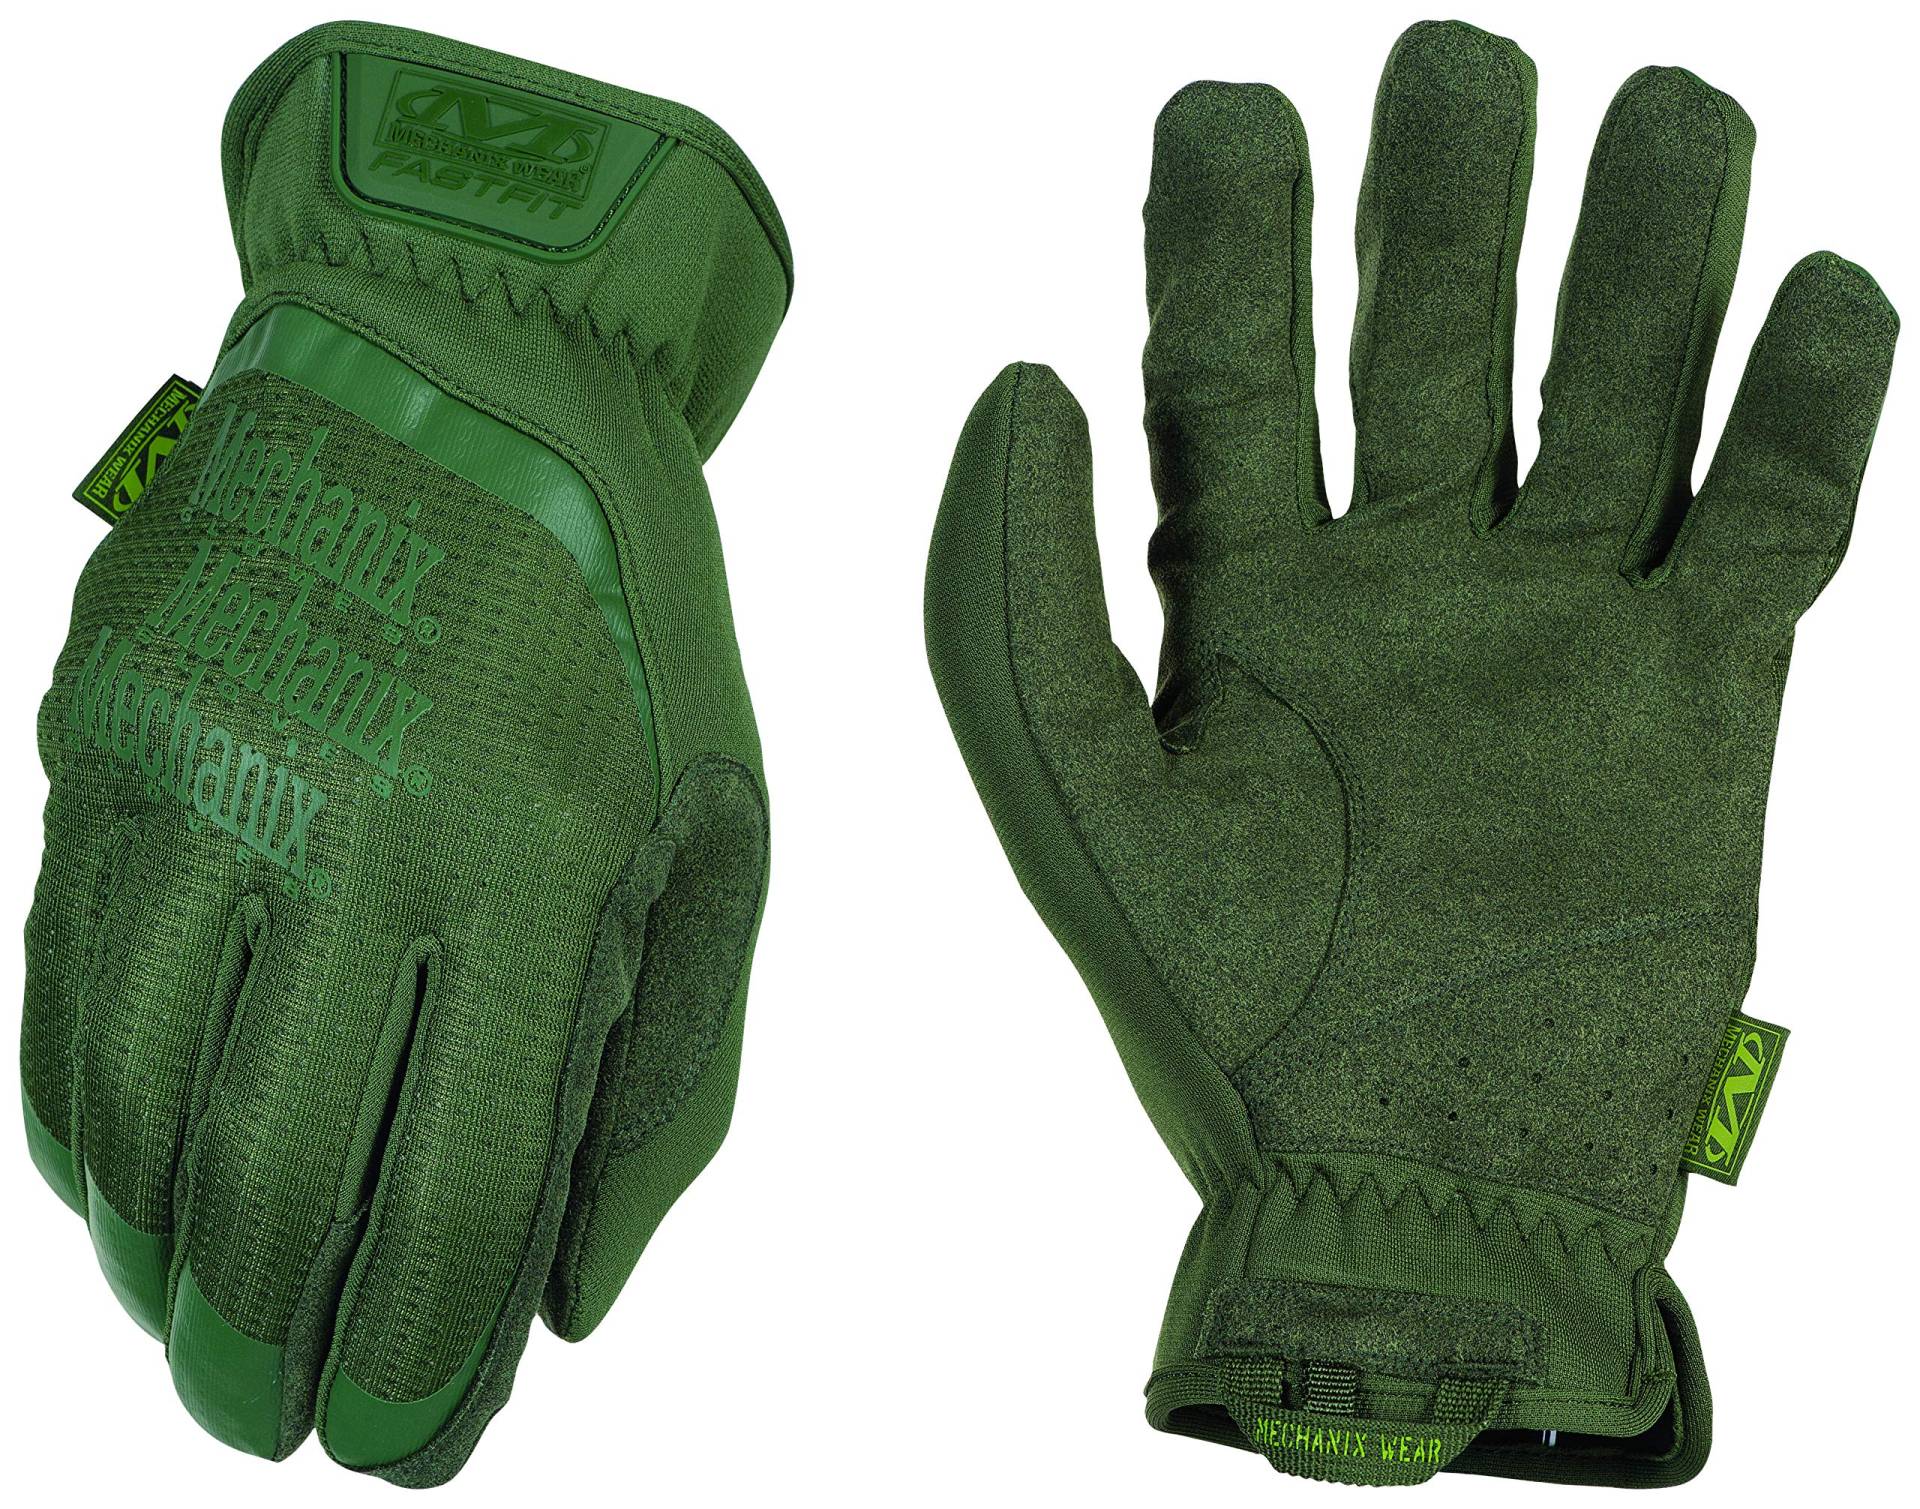 Mechanix Herren FastFit Tactical Touch Handschuhe, grün, XX-Large, OD Grün von Mechanix Wear